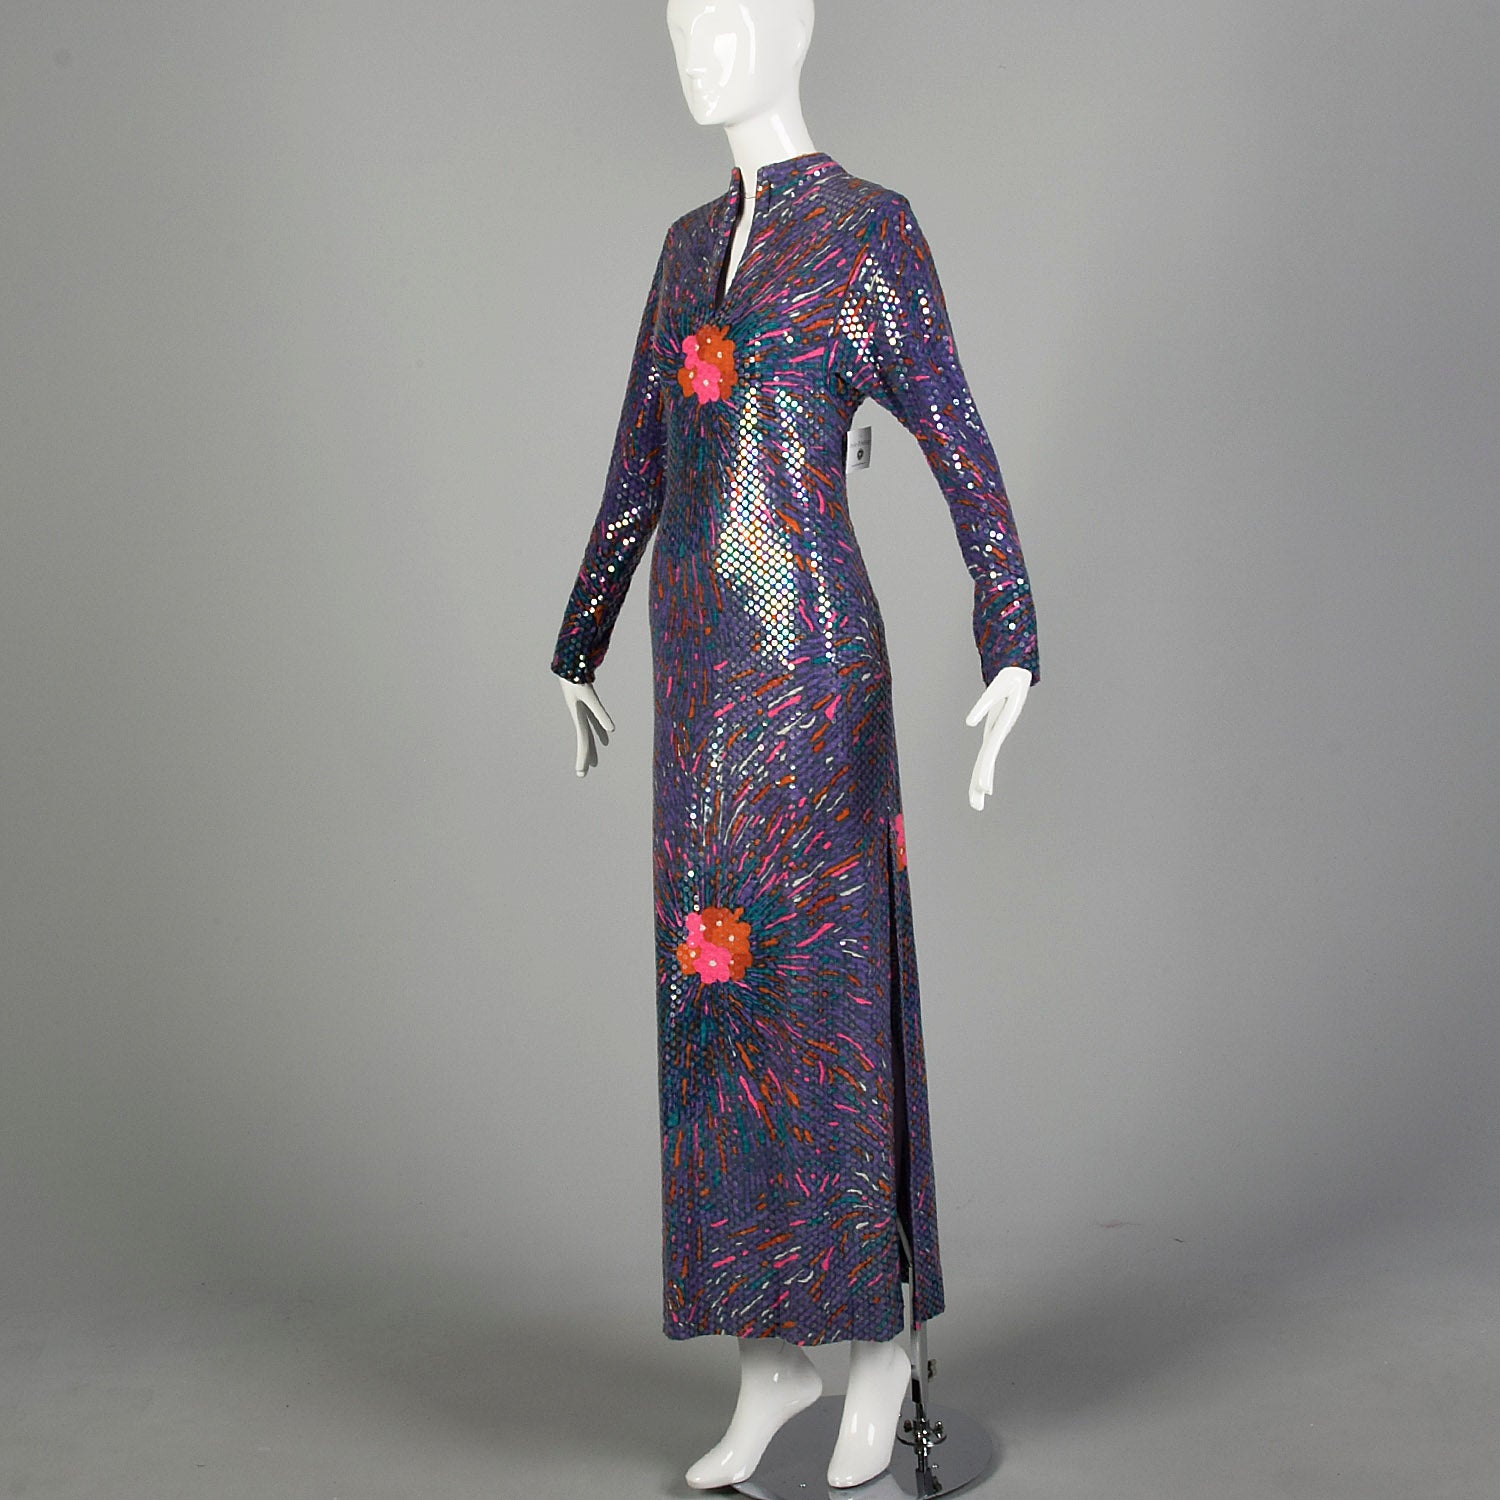 Small 1970s Malcom Starr Purple Evening Gown Purple Sequin Maxi Dress